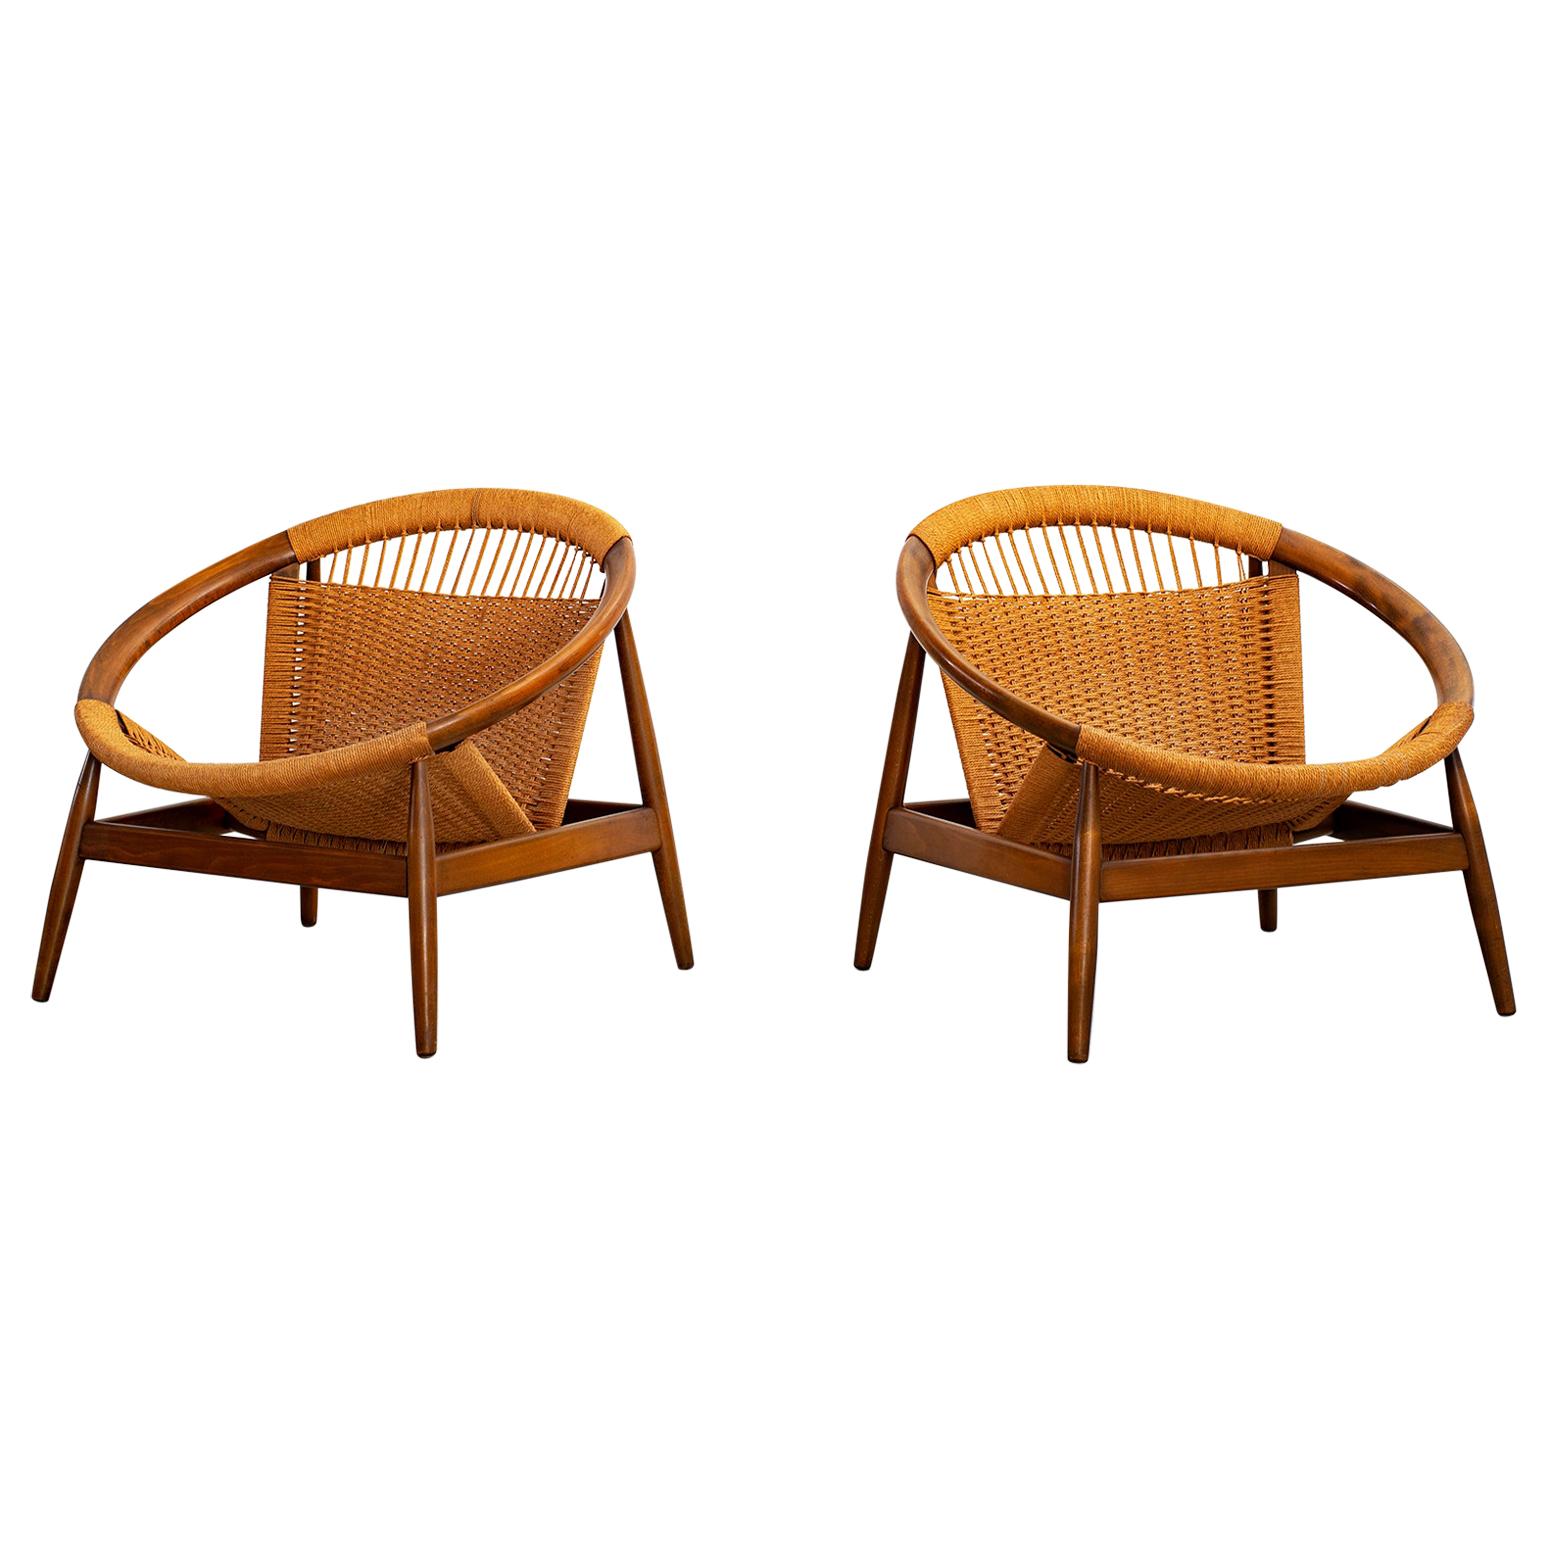 Illum Wikkelso "Ringstol" Lounge Chairs